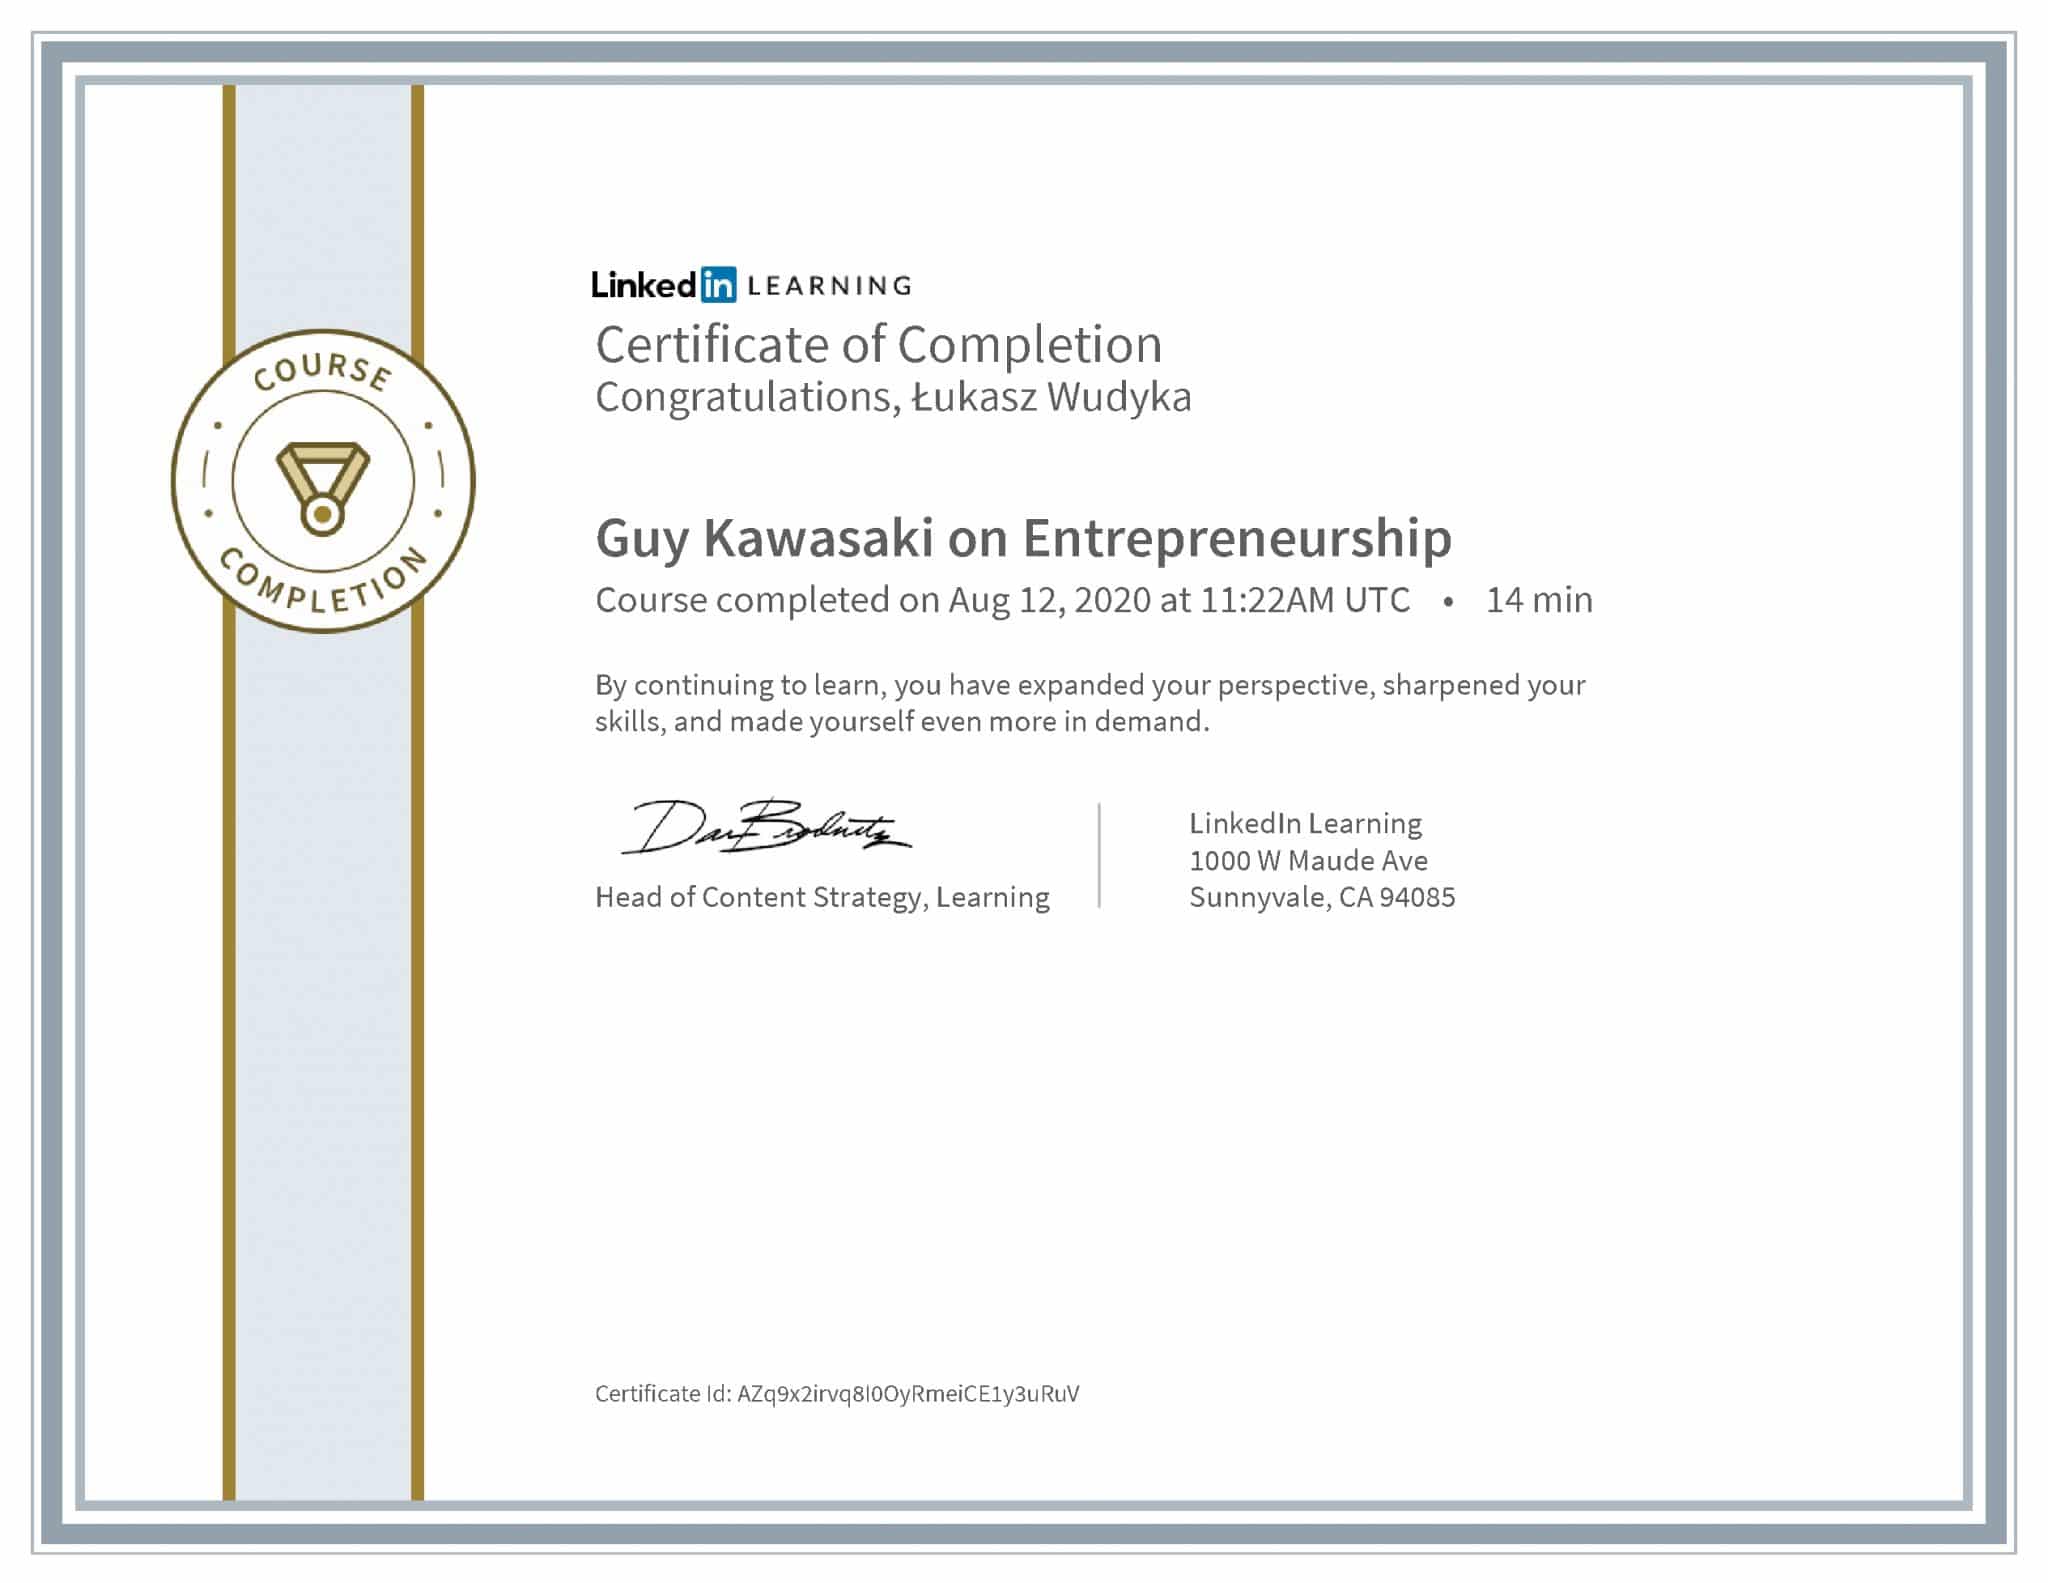 Łukasz Wudyka certyfikat LinkedIn Guy Kawasaki on Entrepreneurship